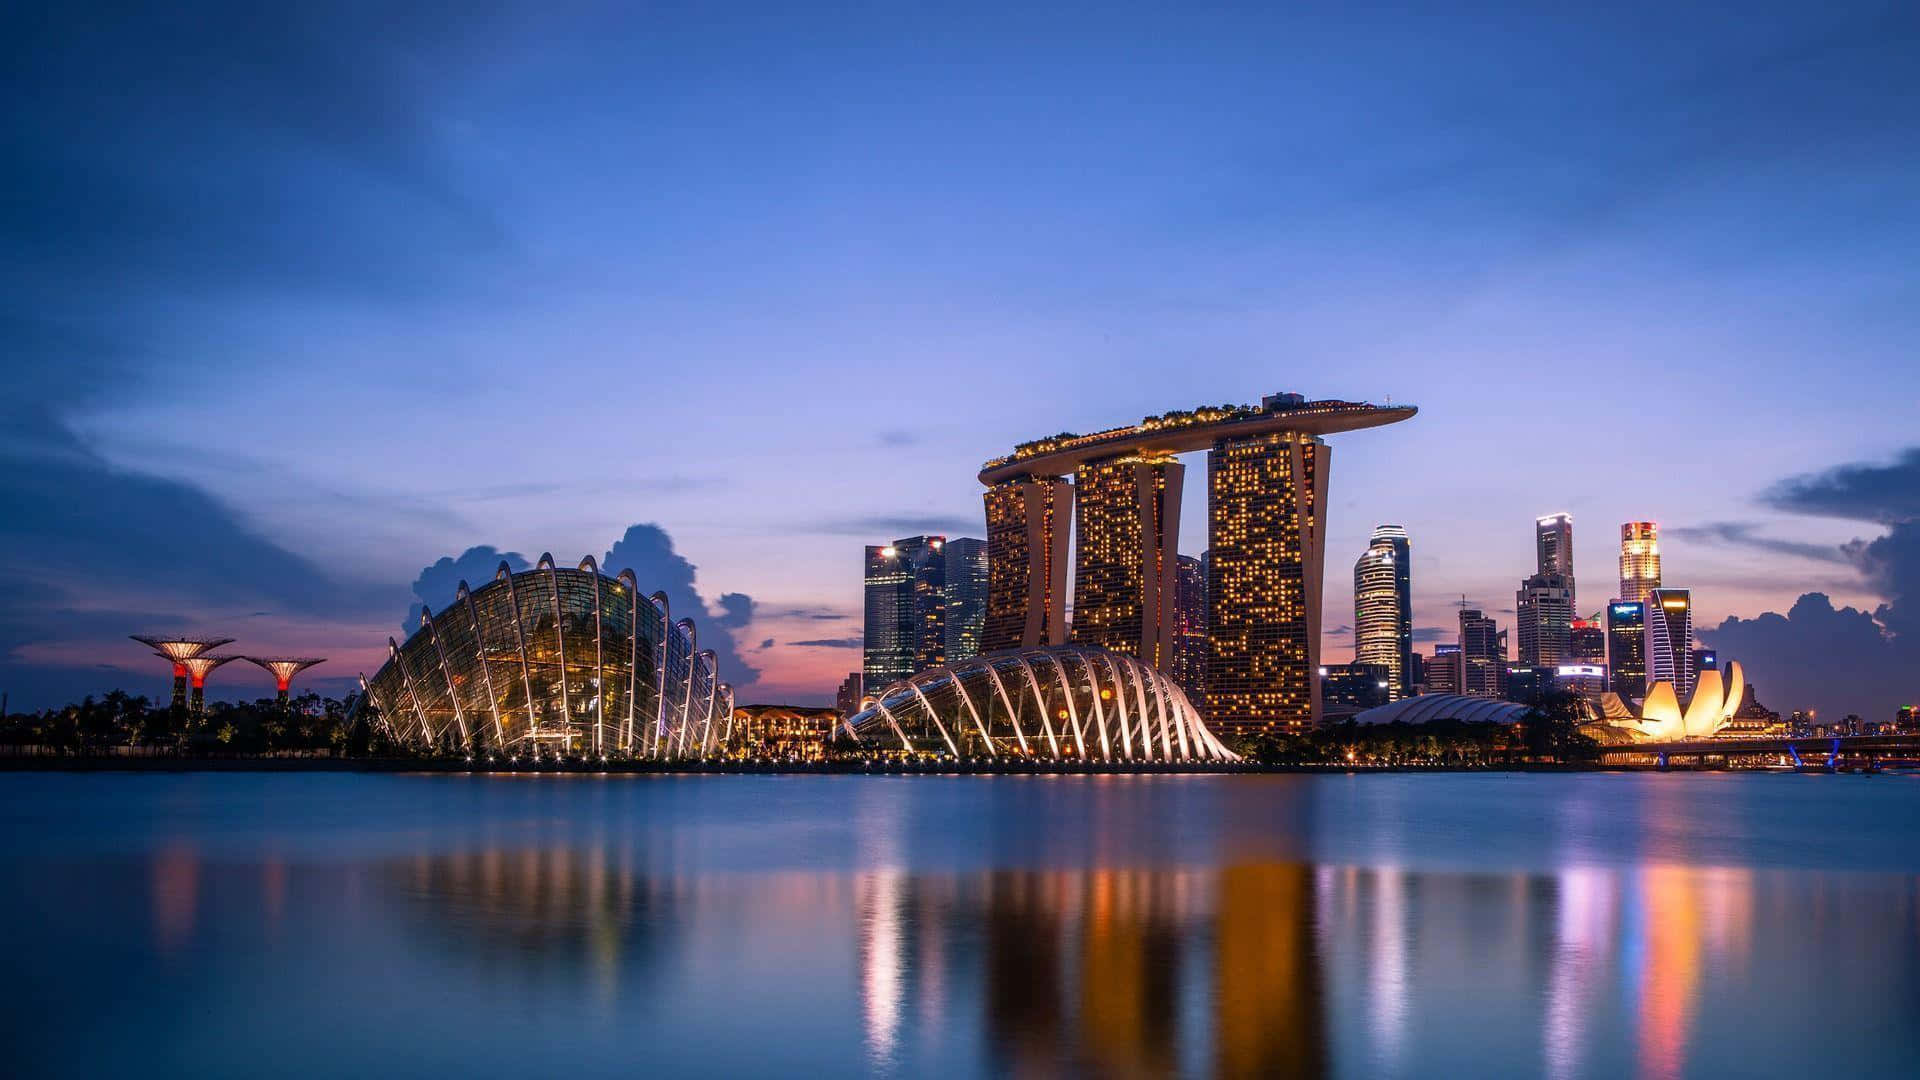 Impresionantevista Del Moderno Horizonte De Singapur.